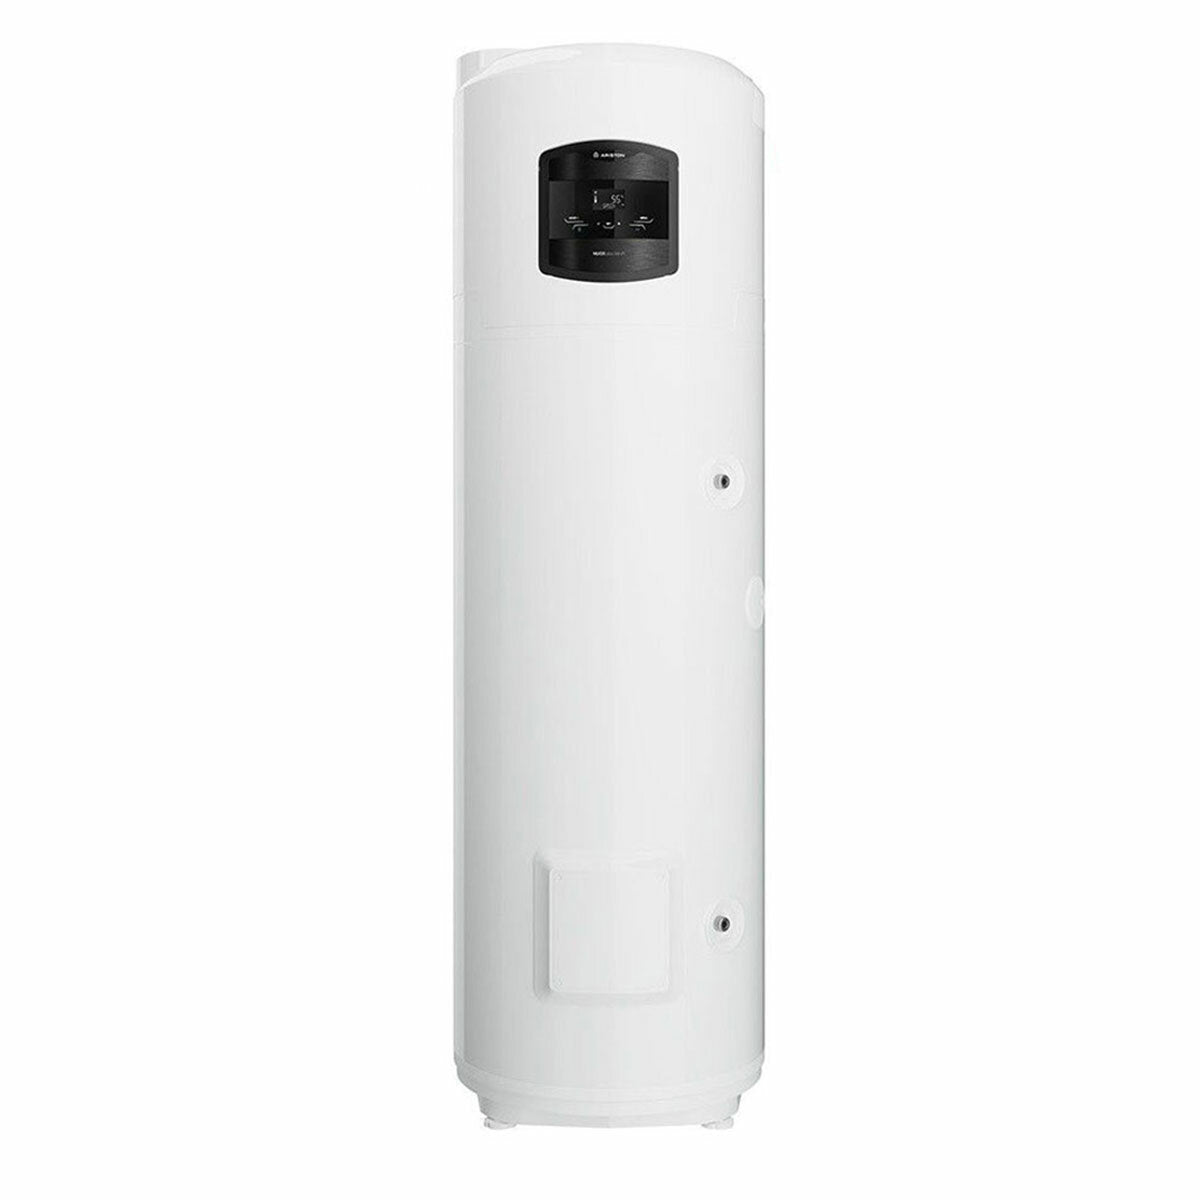 Ariston Nuos PLUS Wi-Fi heat pump water heater 250 liters A+